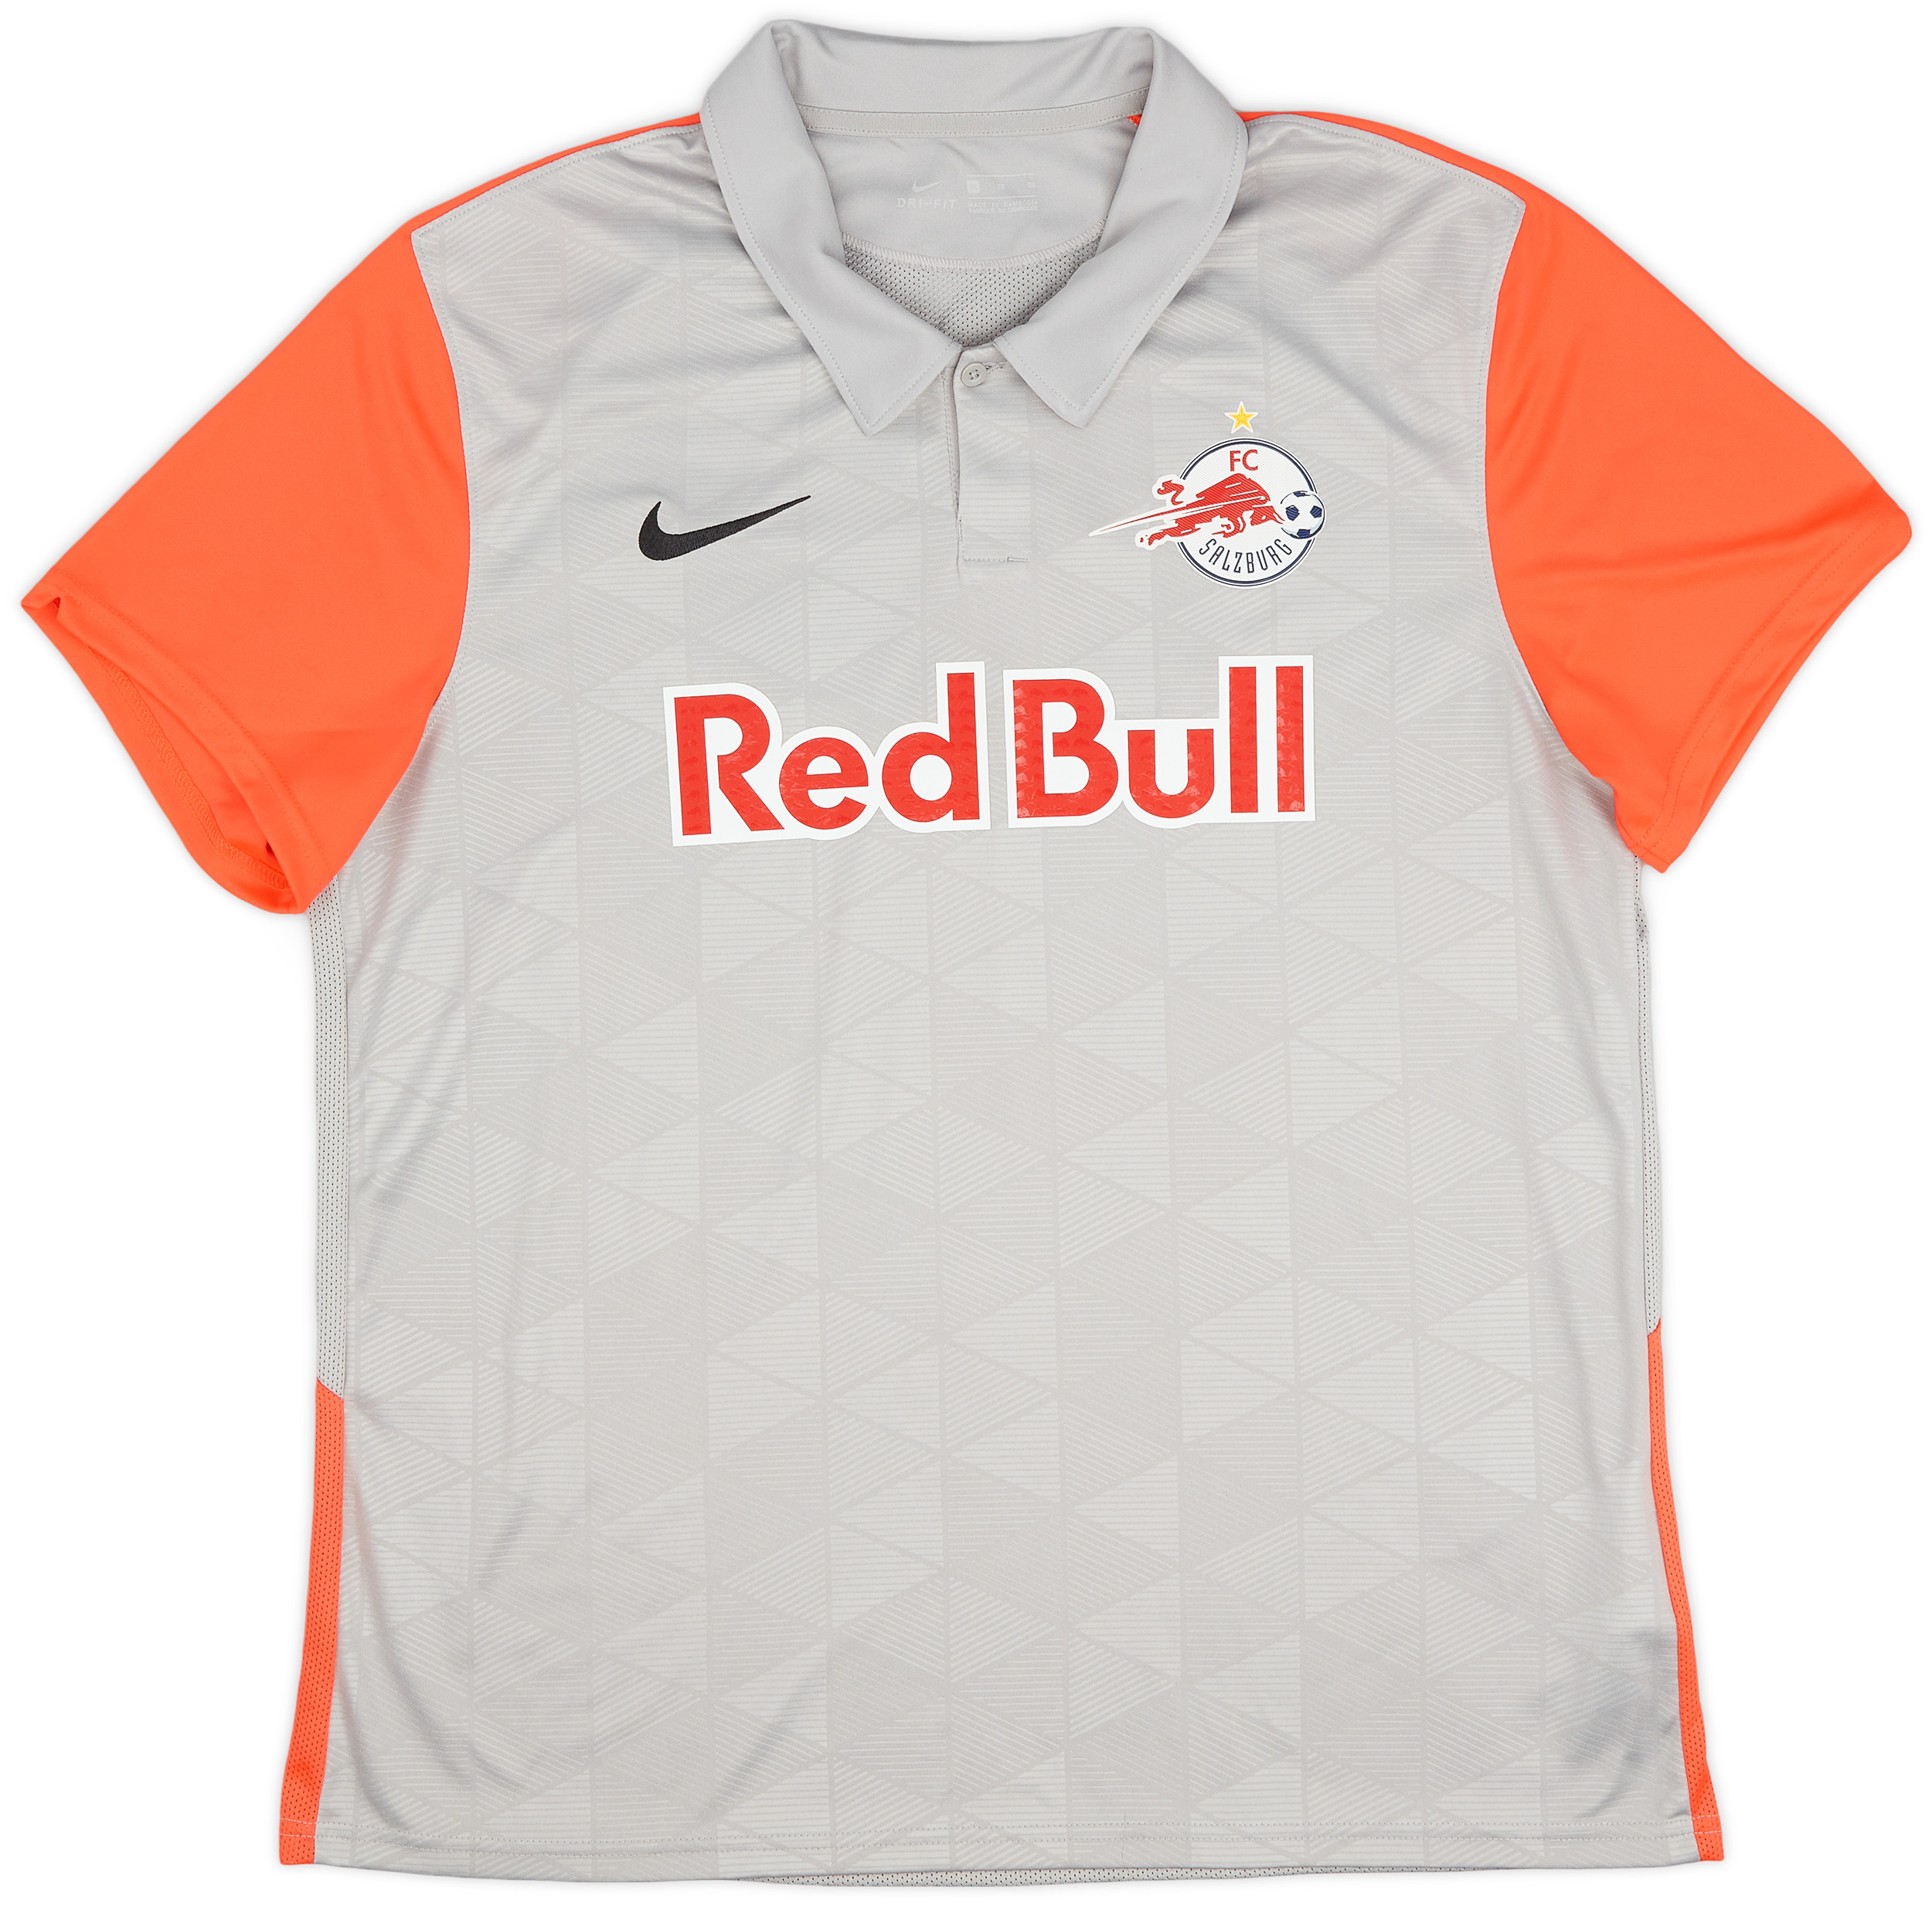 Red Bull Salzburg  Fora camisa (Original)